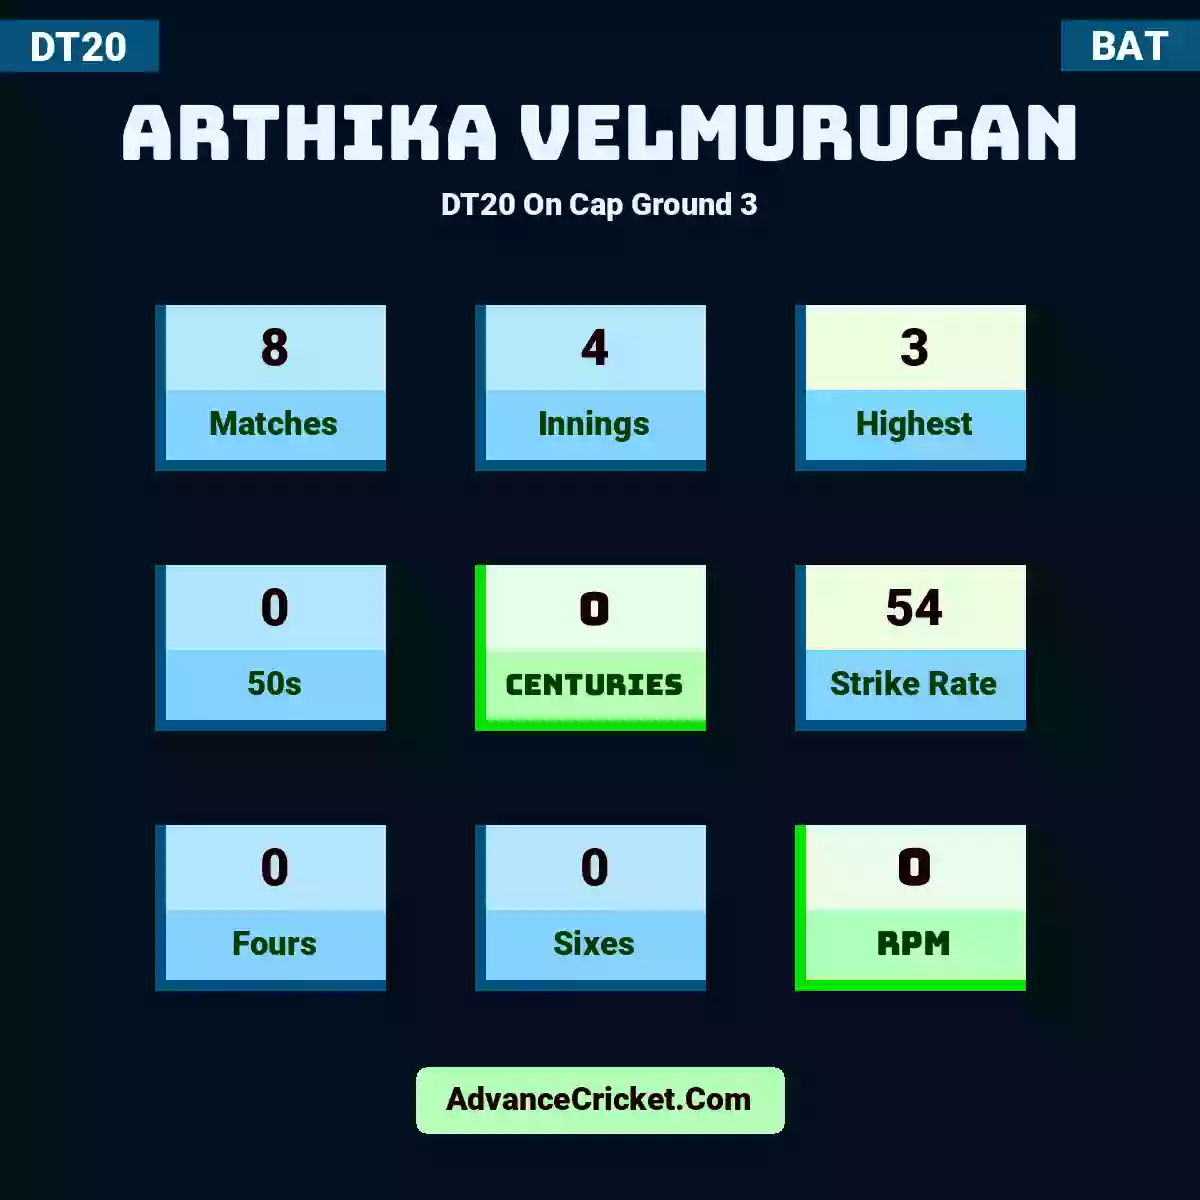 Arthika Velmurugan DT20  On Cap Ground 3, Arthika Velmurugan played 8 matches, scored 3 runs as highest, 0 half-centuries, and 0 centuries, with a strike rate of 54. A.Velmurugan hit 0 fours and 0 sixes, with an RPM of 0.